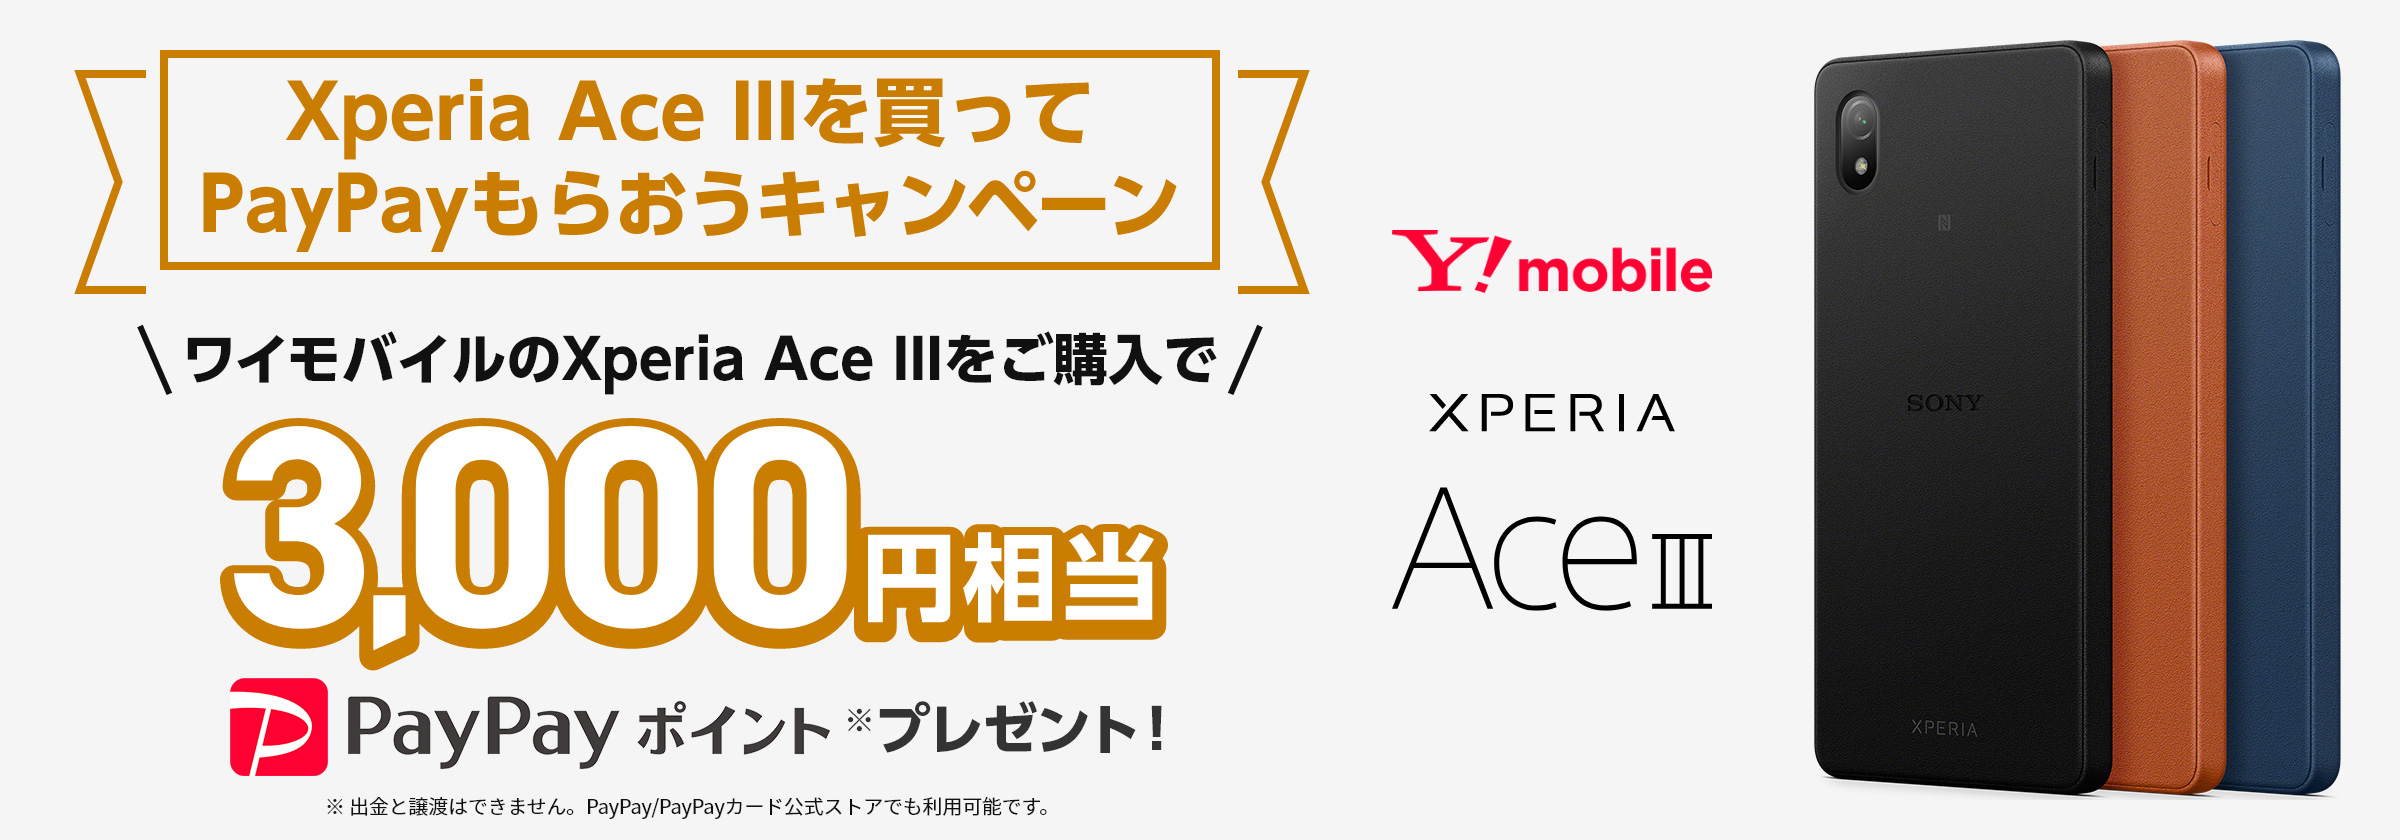 Y!mobile Xperia Ace IIIを買ってPayPayもらおうキャンペーン ワイモバイルのXperia Ace IIIをご購入で3,000円相当PayPayポイント※プレゼント！※出金と譲渡はできません。PayPay/PayPayカード公式ストアでも利用可能です。